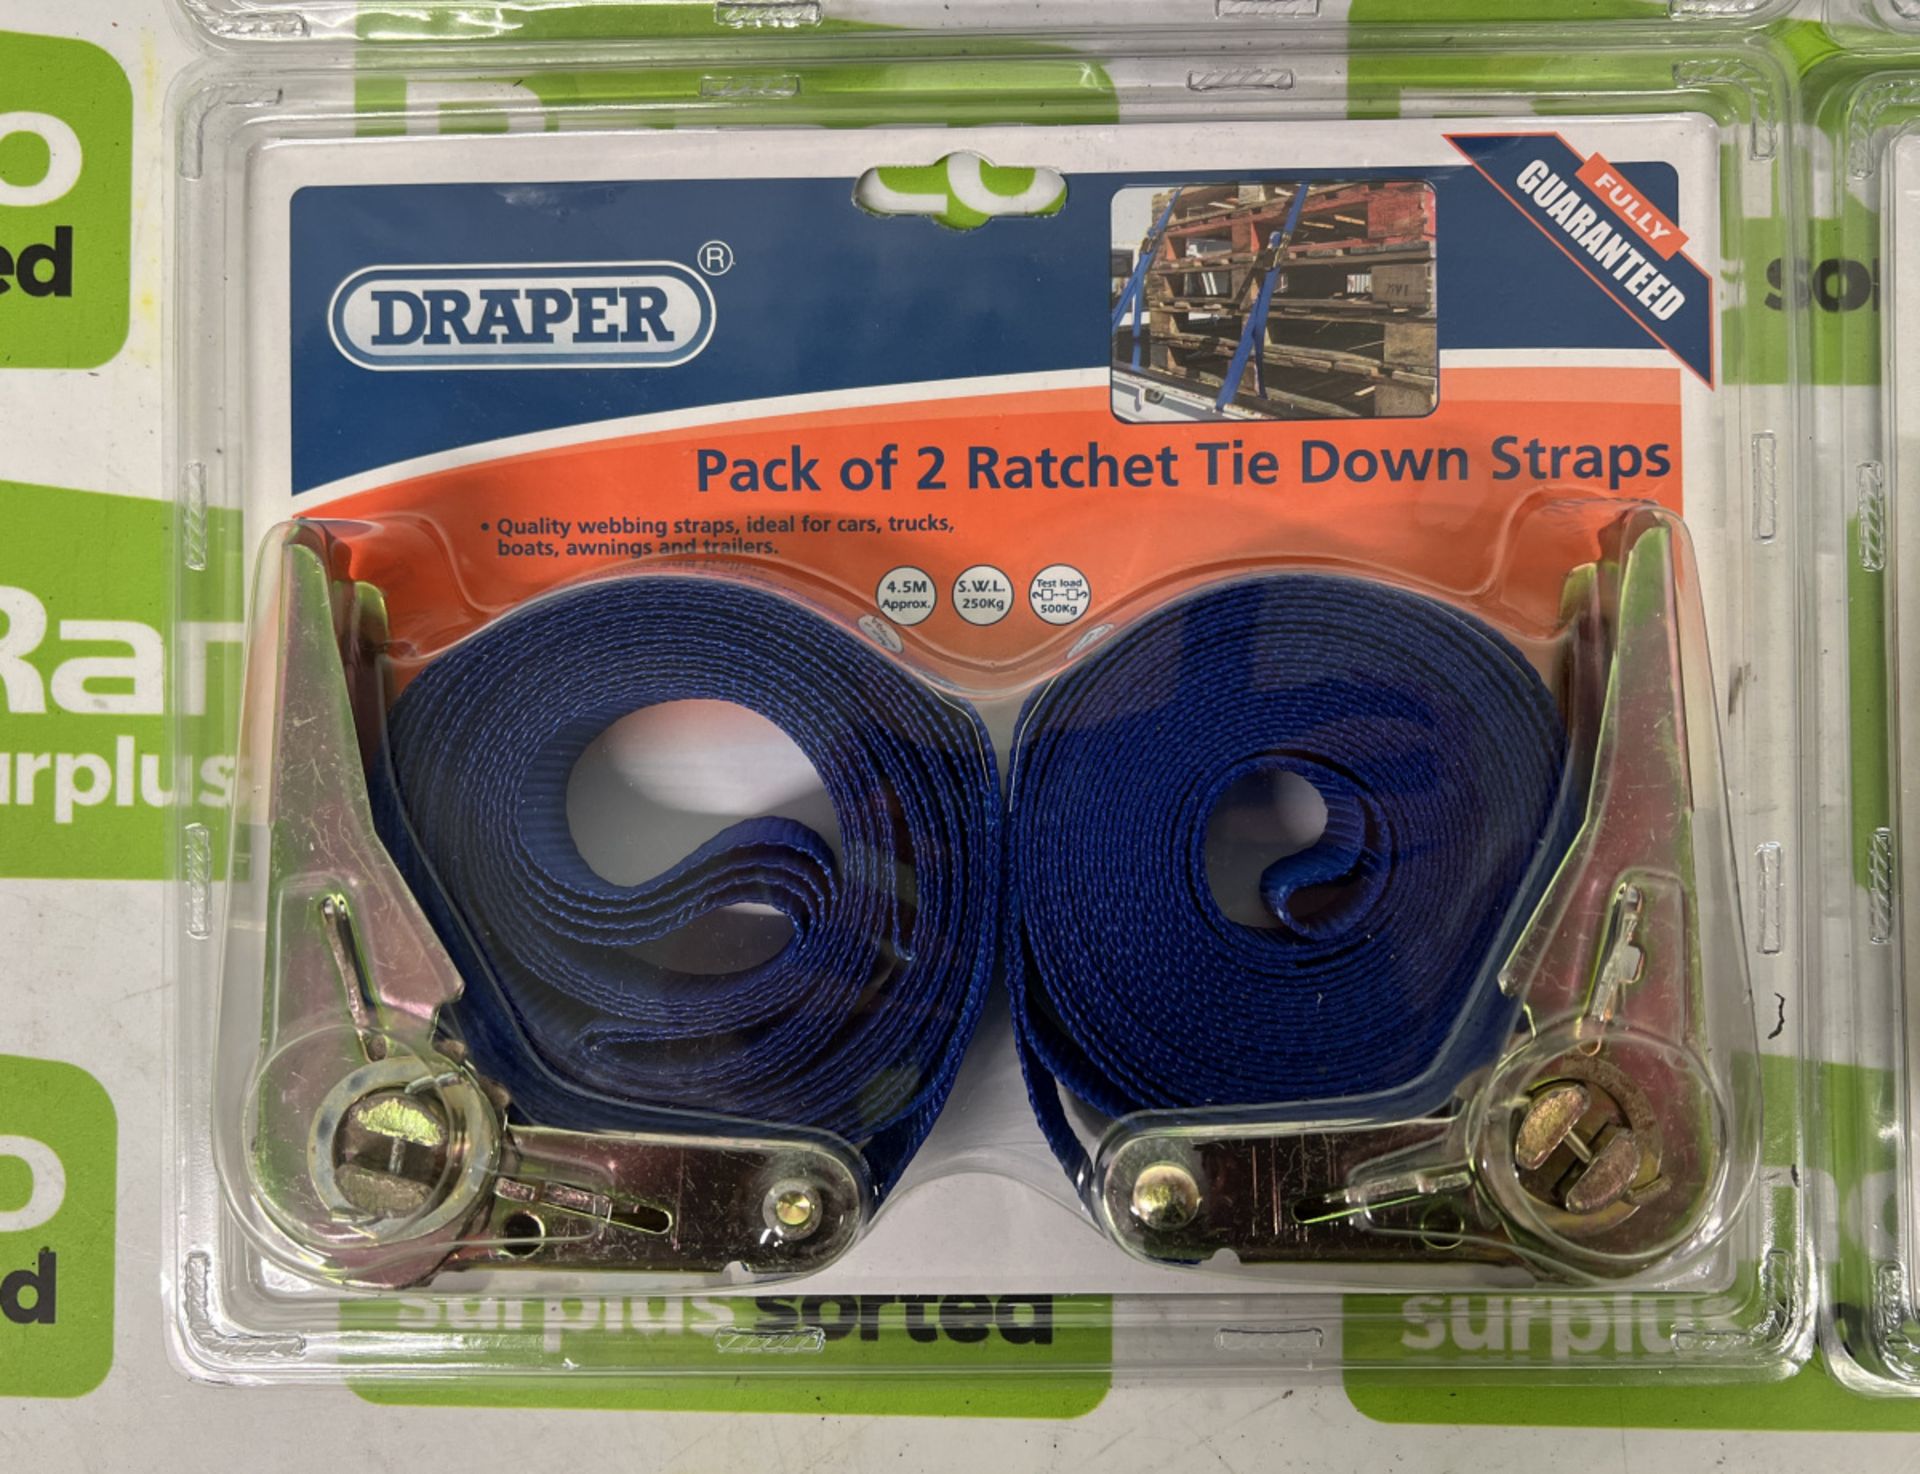 6x packs of Draper 4.5m 500 kg ratchet straps - 2 straps per pack - Image 2 of 3